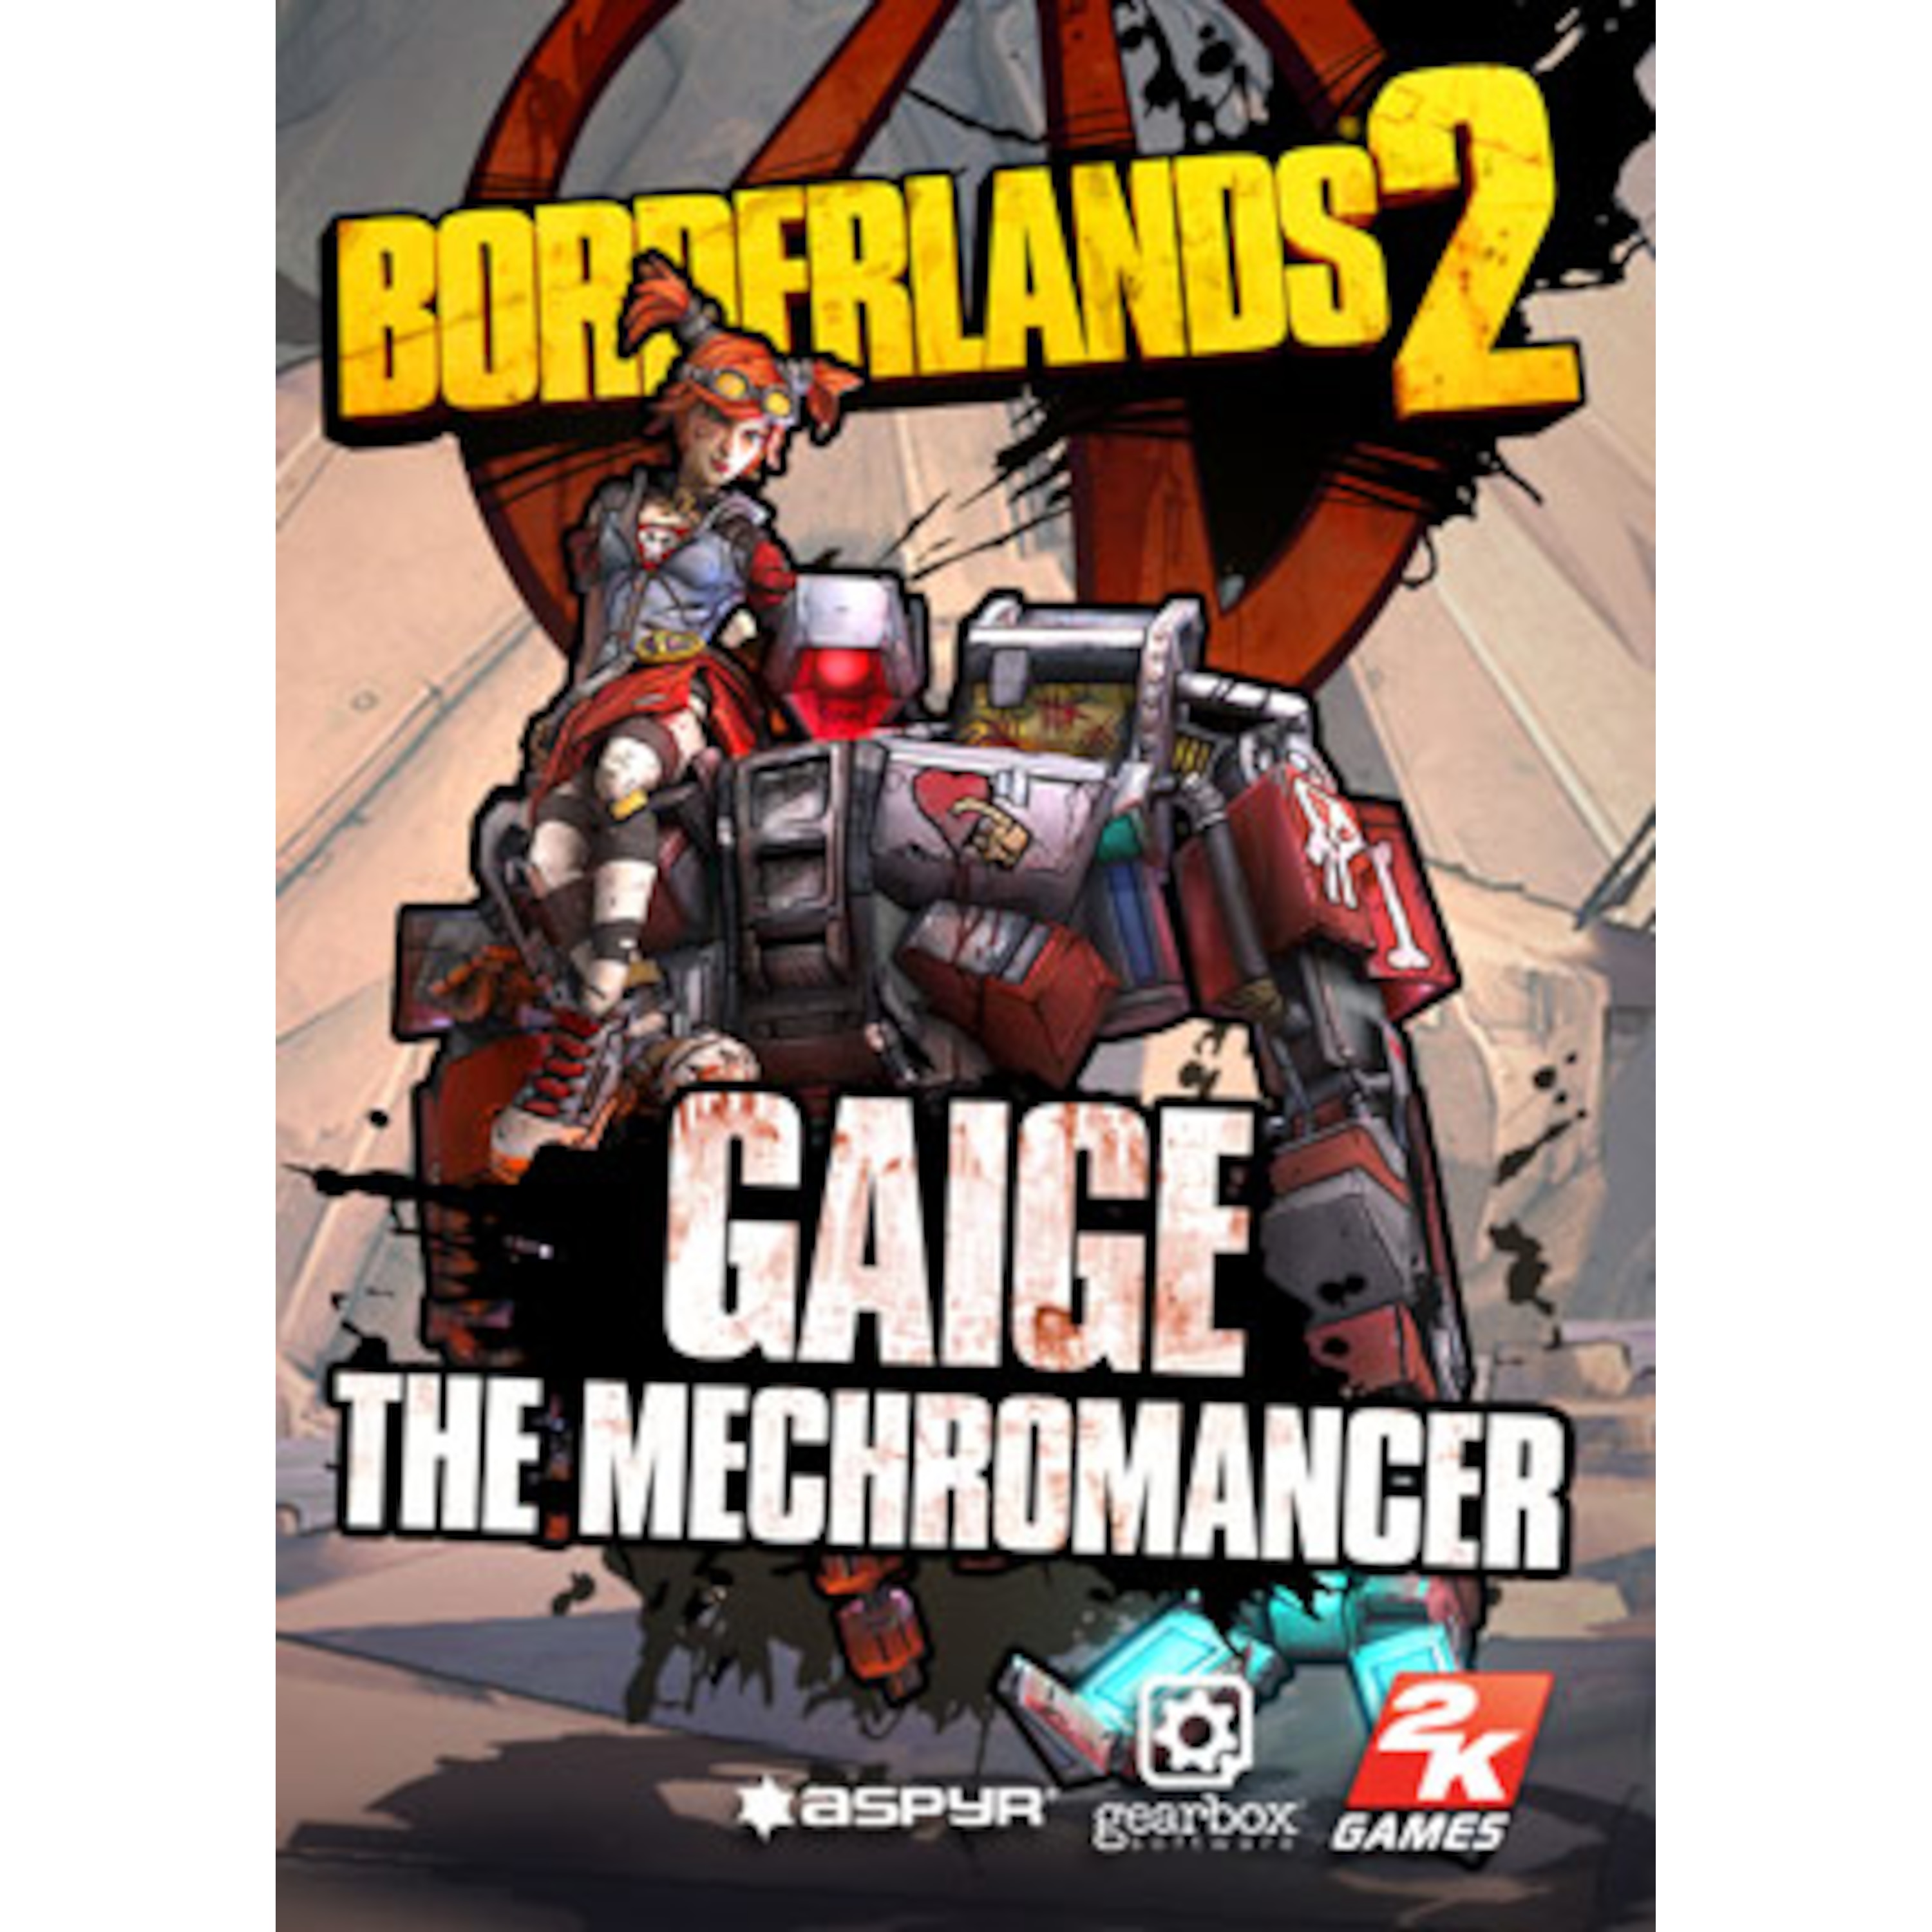 borderlands 2 mechromancer pack pc free download